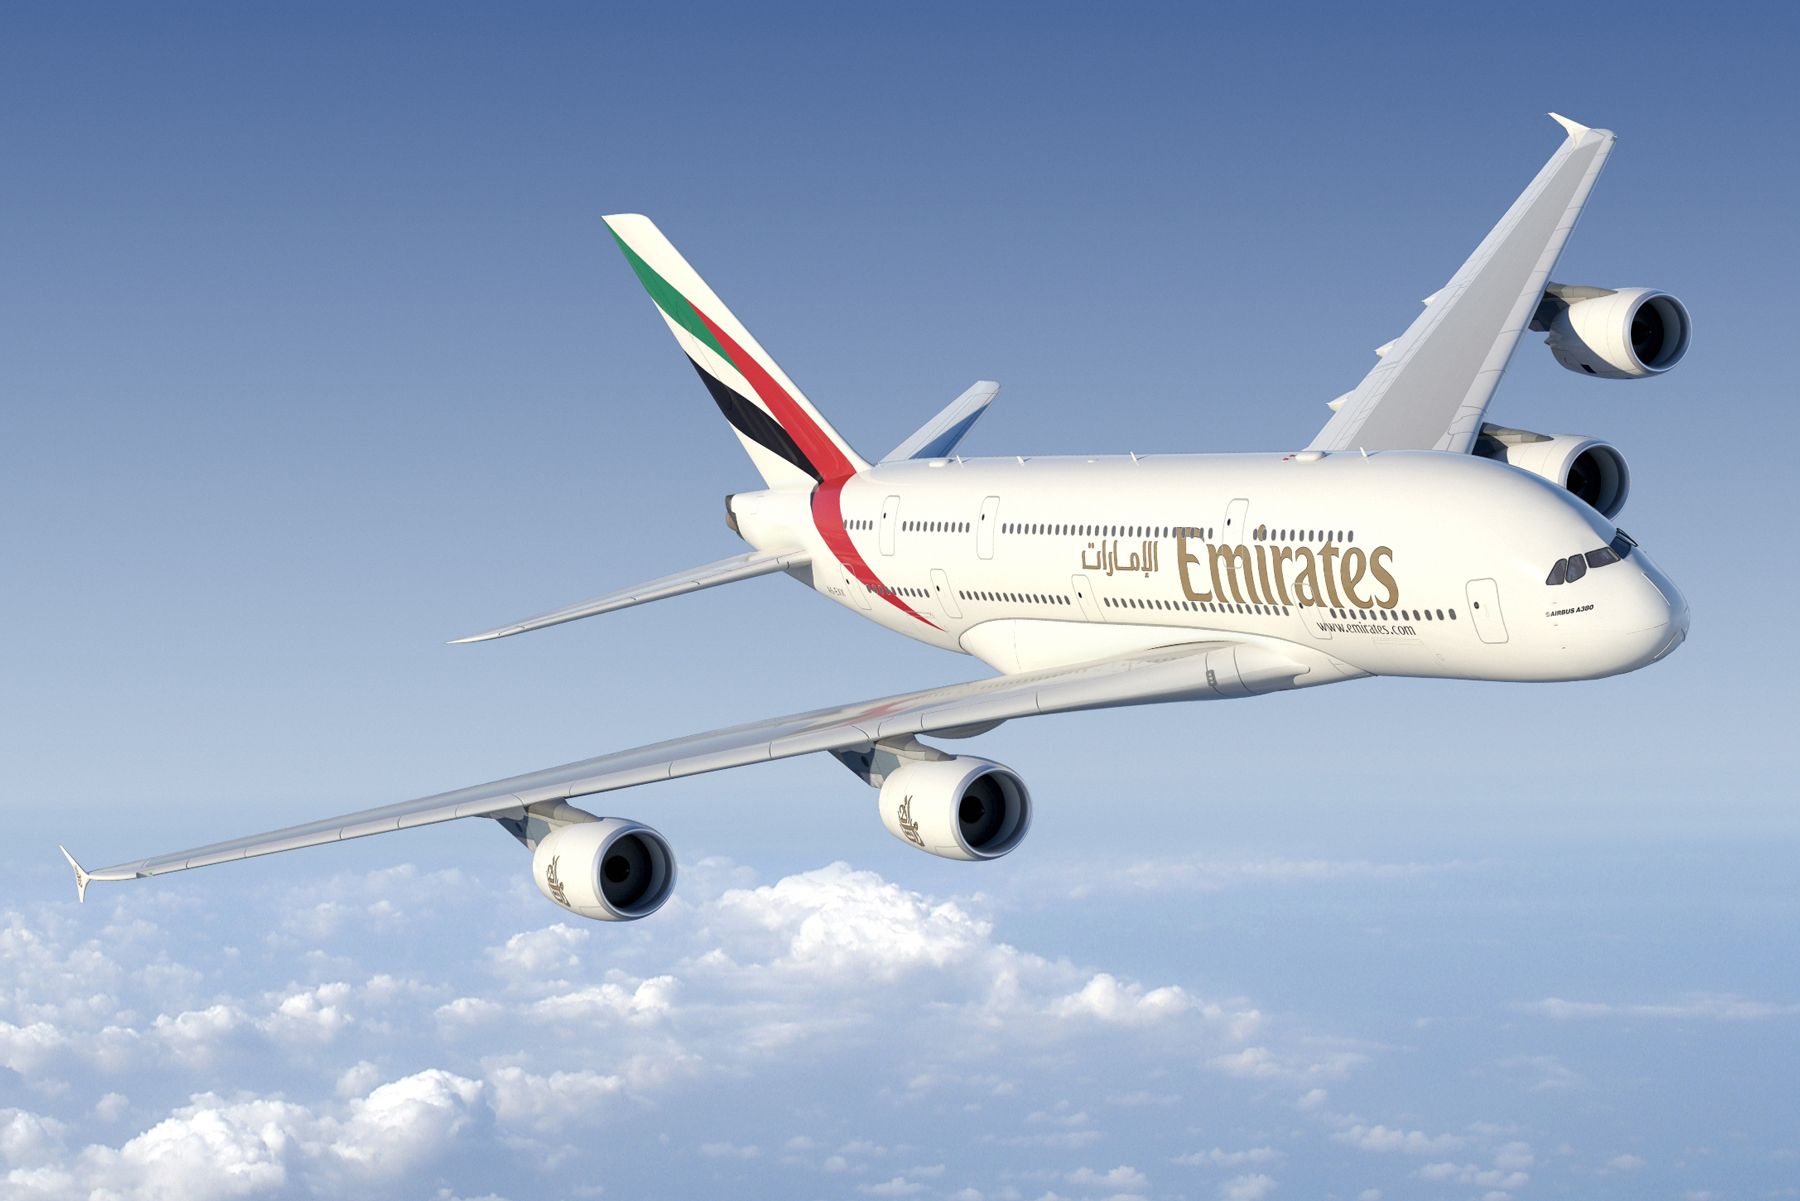 Emirates kone